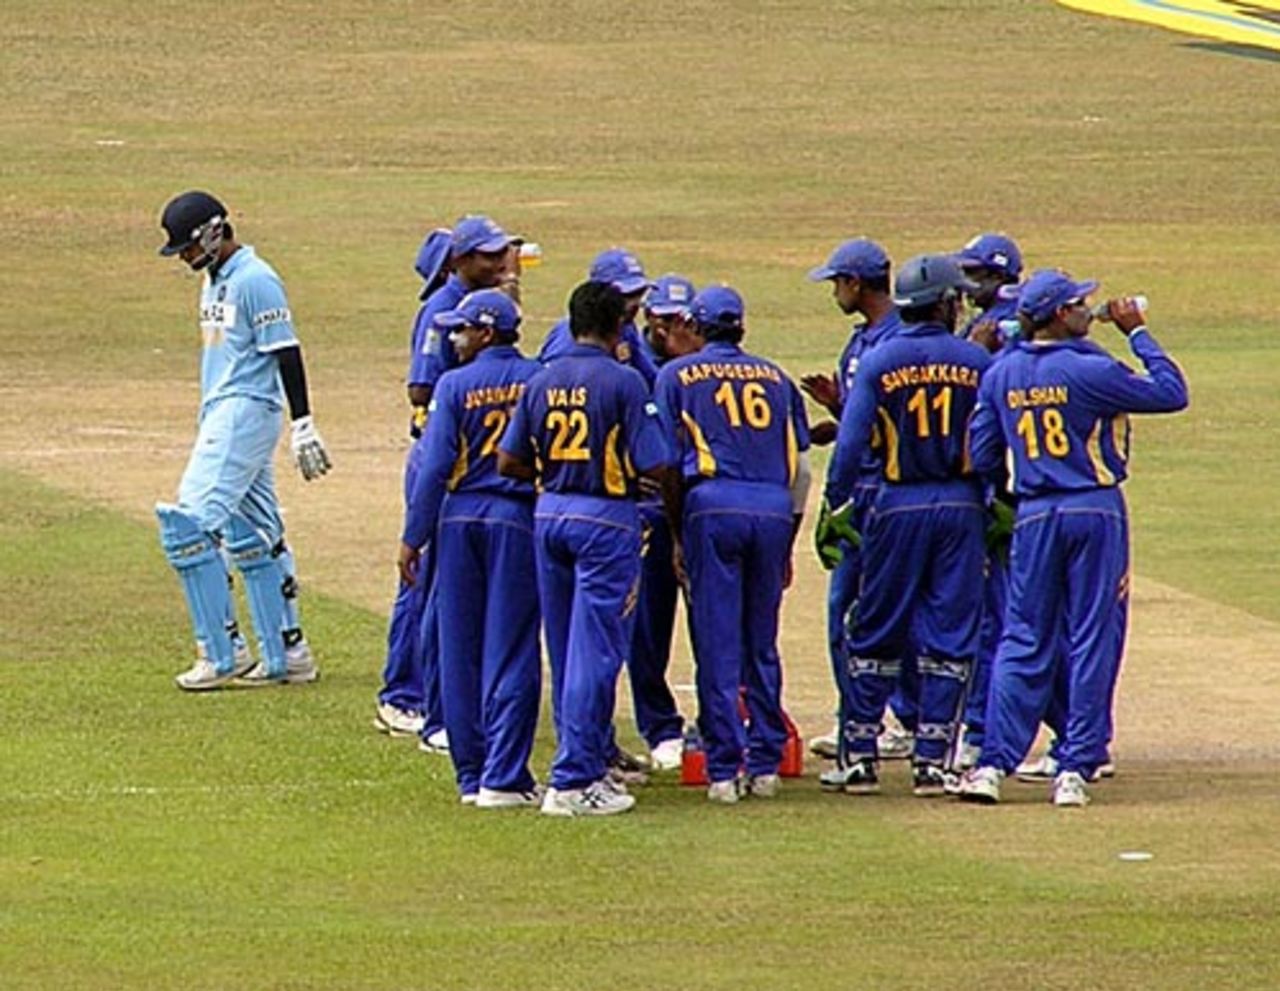 Sri Lankan players take a breather after the fall of Virat Kohli's wicket, Sri Lanka v India, 3rd ODI, Premadasa Stadium, Colombo, August 24, 2008